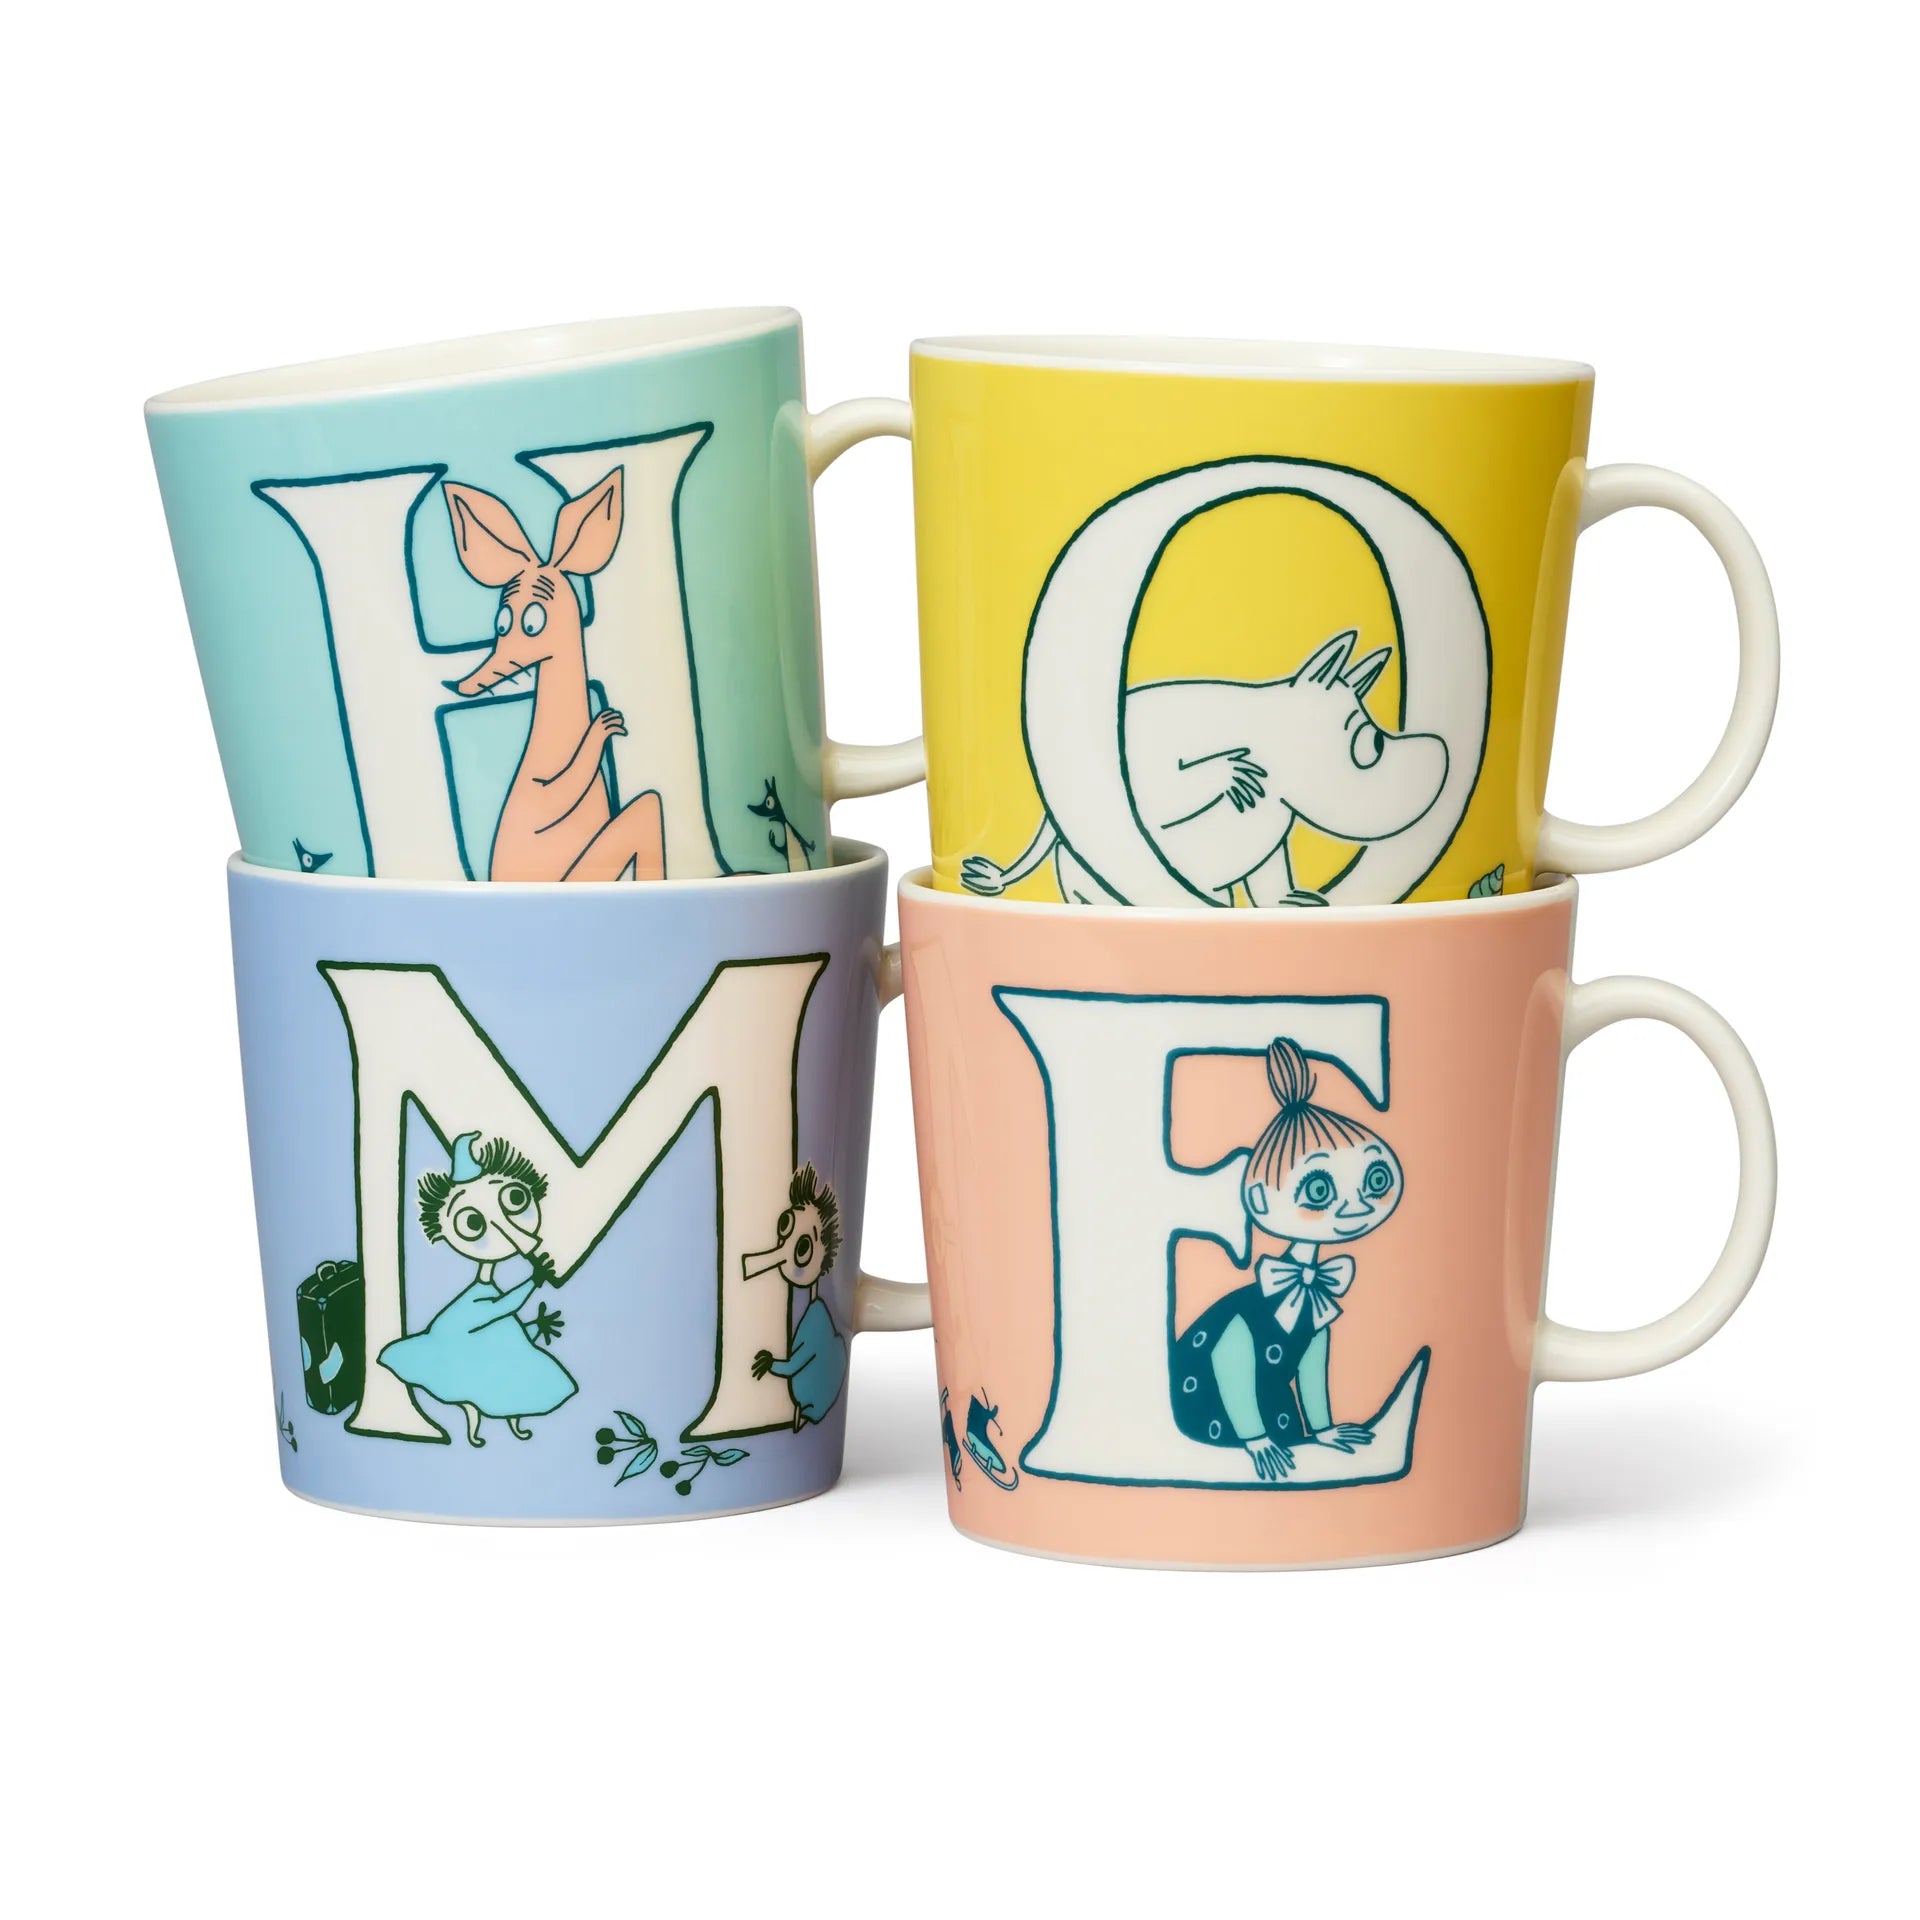 Moomin mug special LARGE 400ml ABC Moomin mug 40 cl O